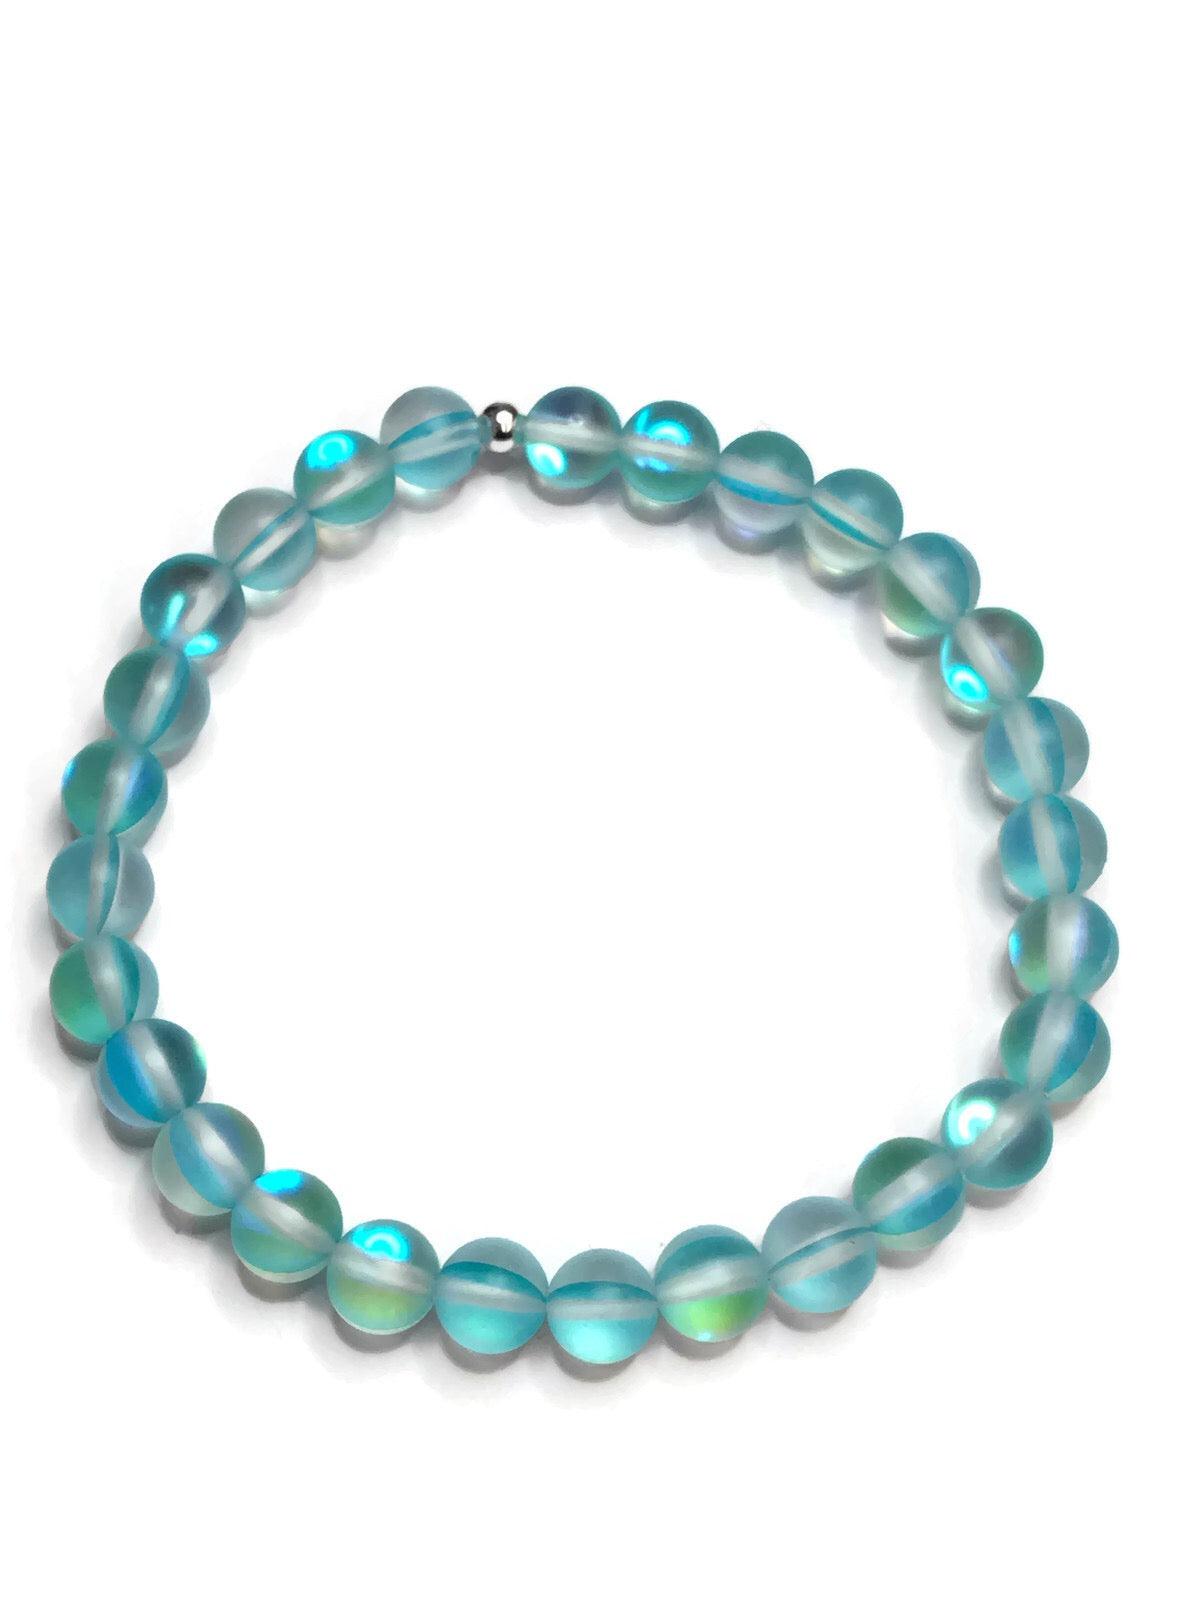 Mermaid Bead Bracelets-Glowy Bead bracelets-Beach Bracelets Grey Beads